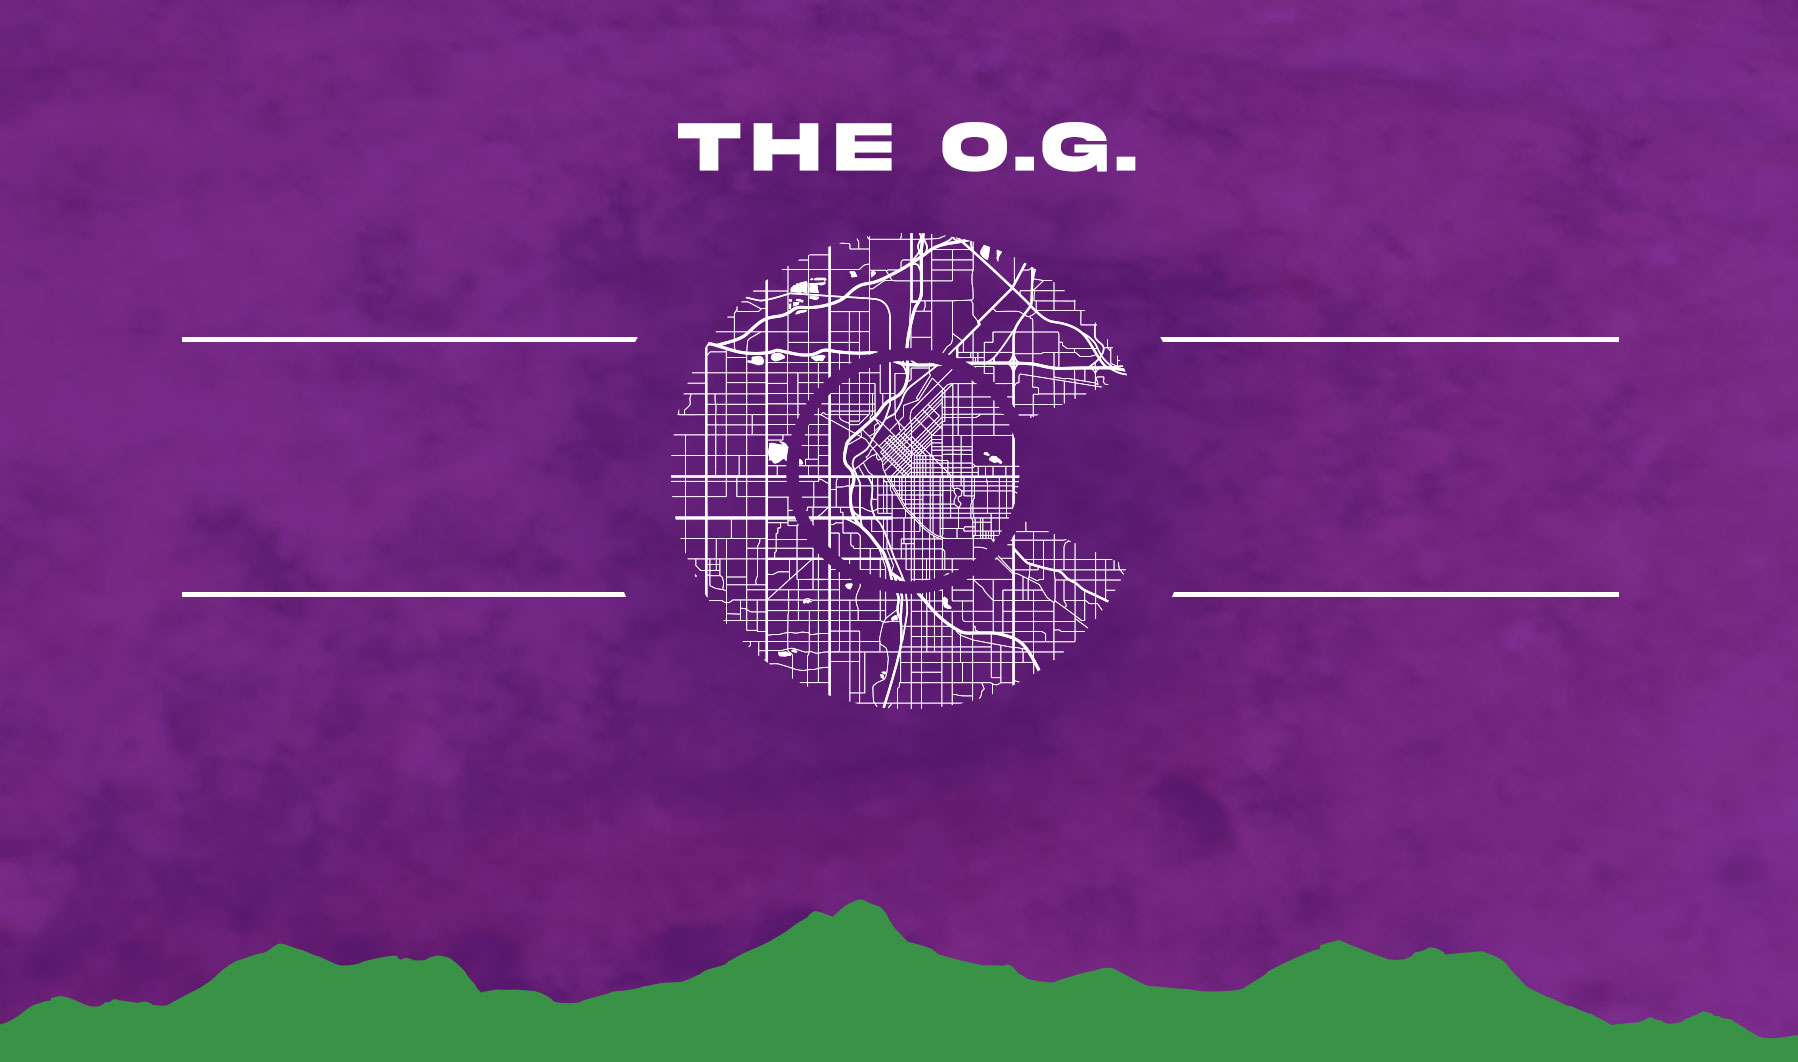 THE O.G.